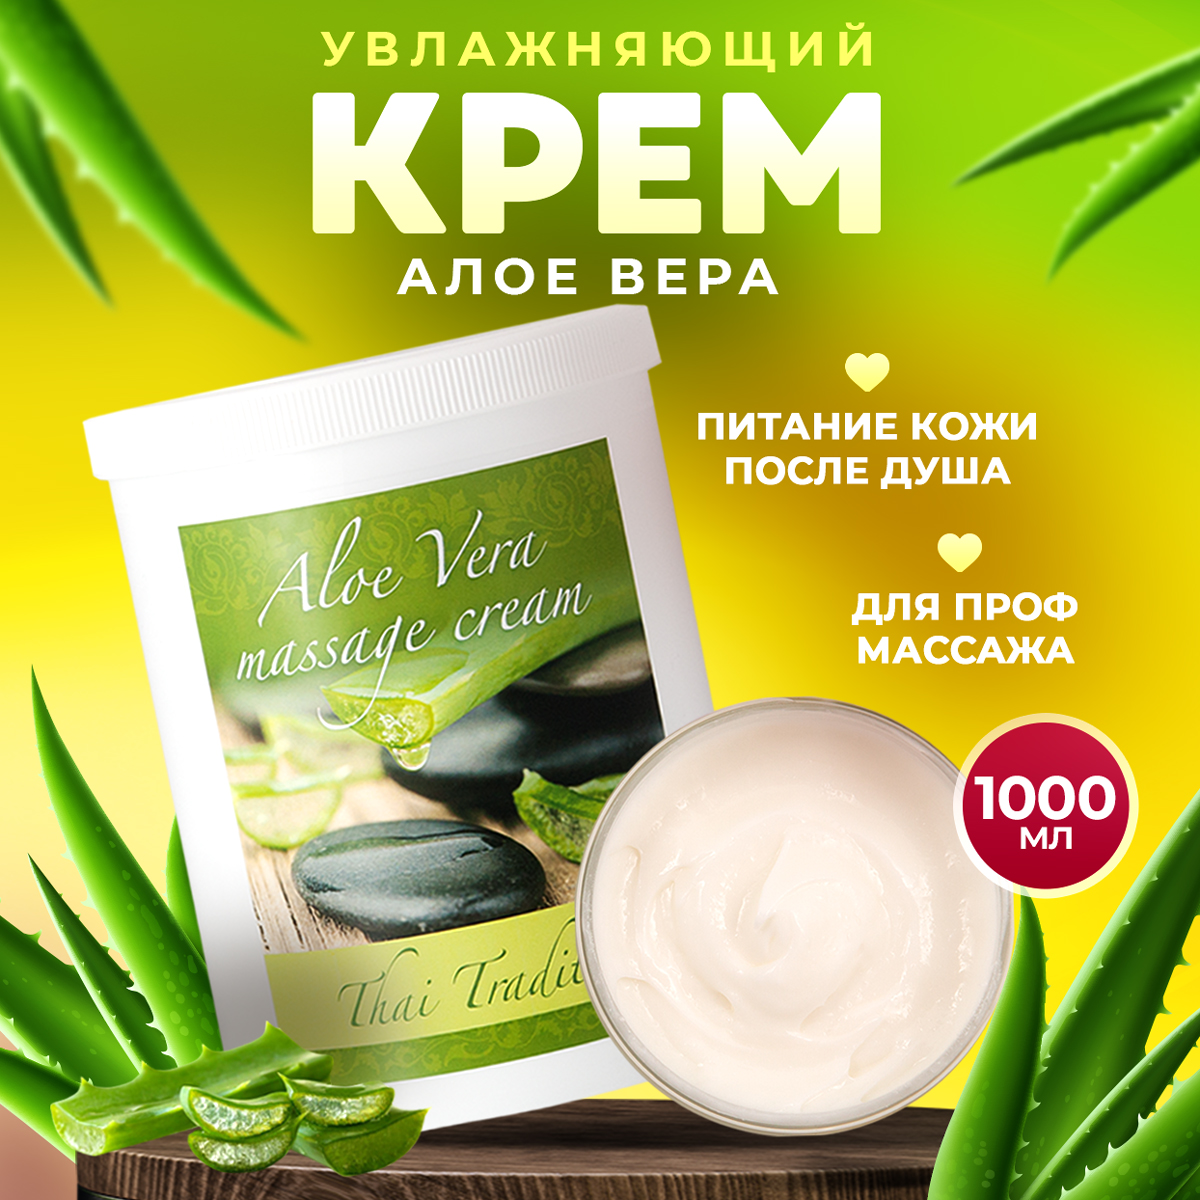 Thai Traditions Professional Body Massage Cream with Aloe Vera, 1 Liter, Hydrating Formula.